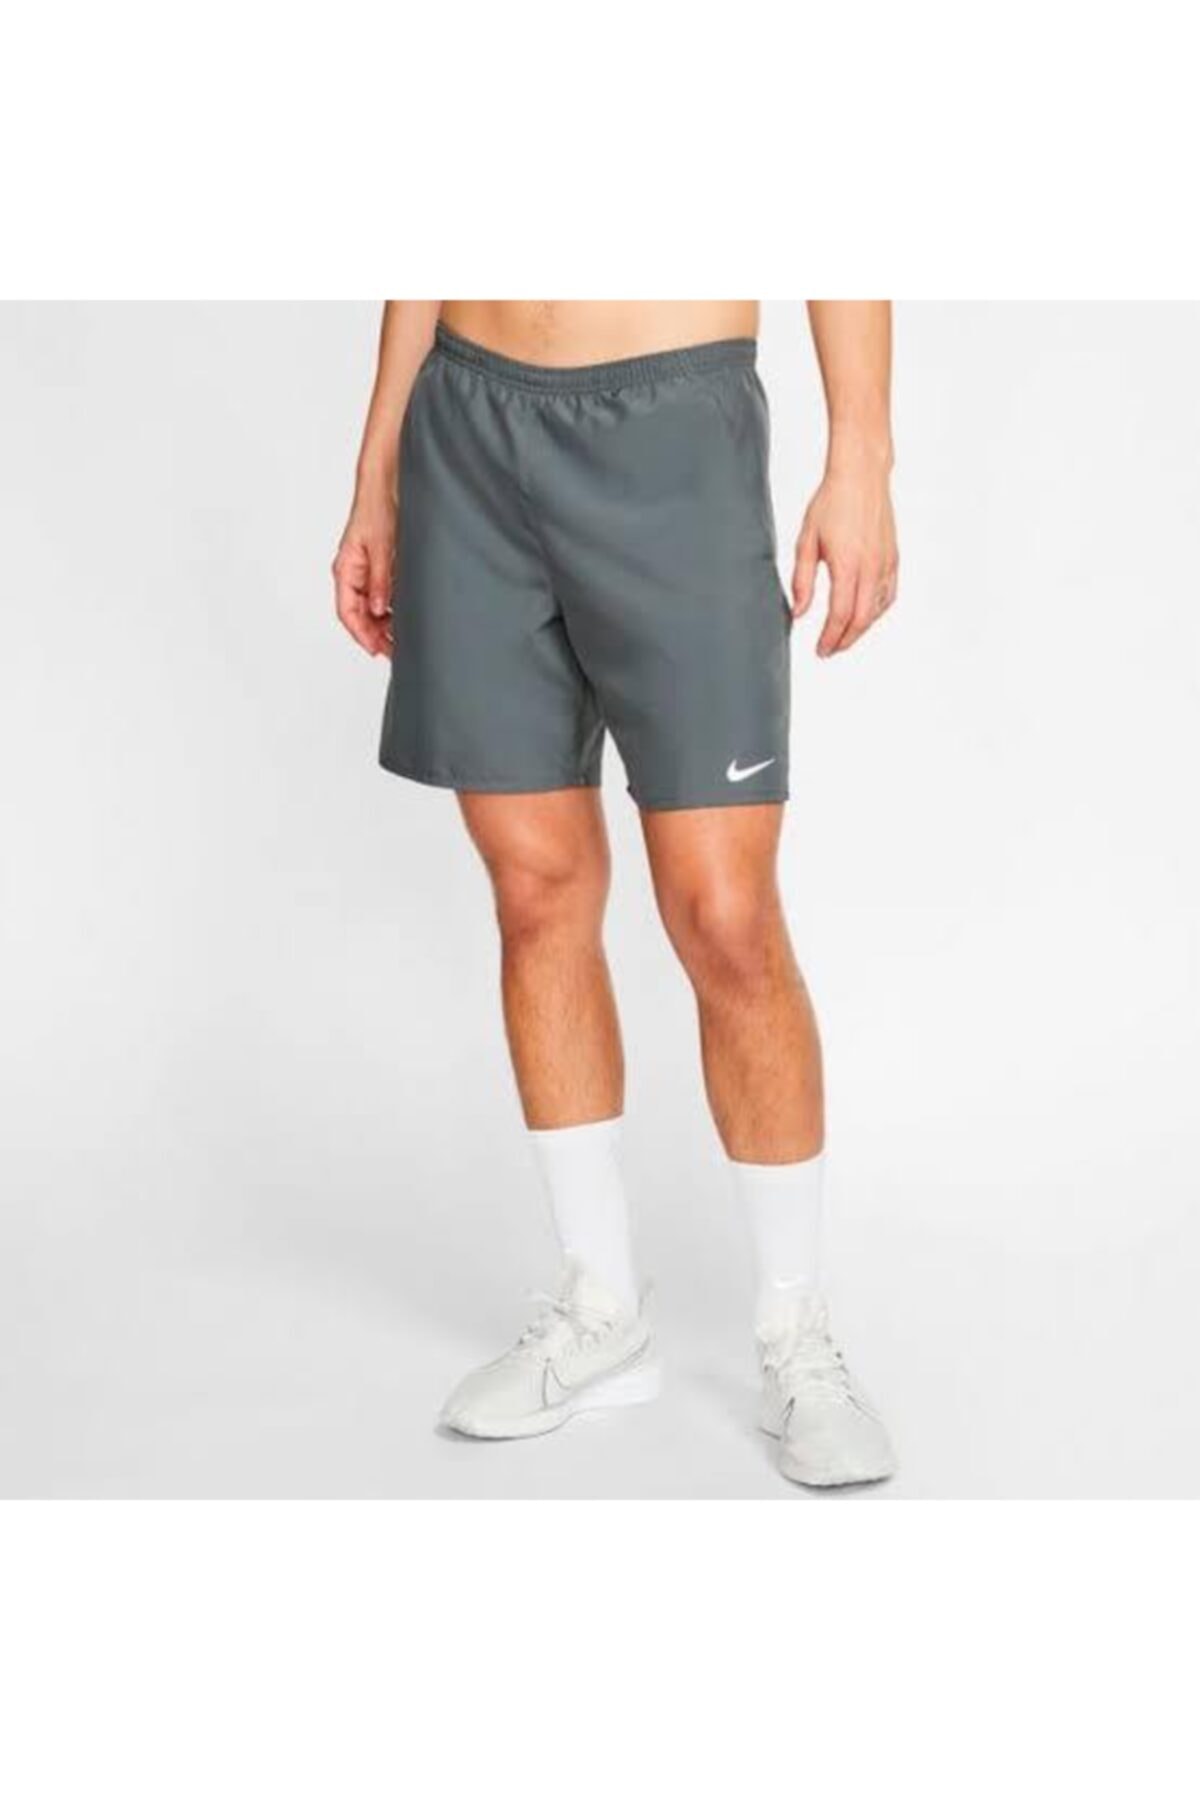 Nike Ck0450-068 Short